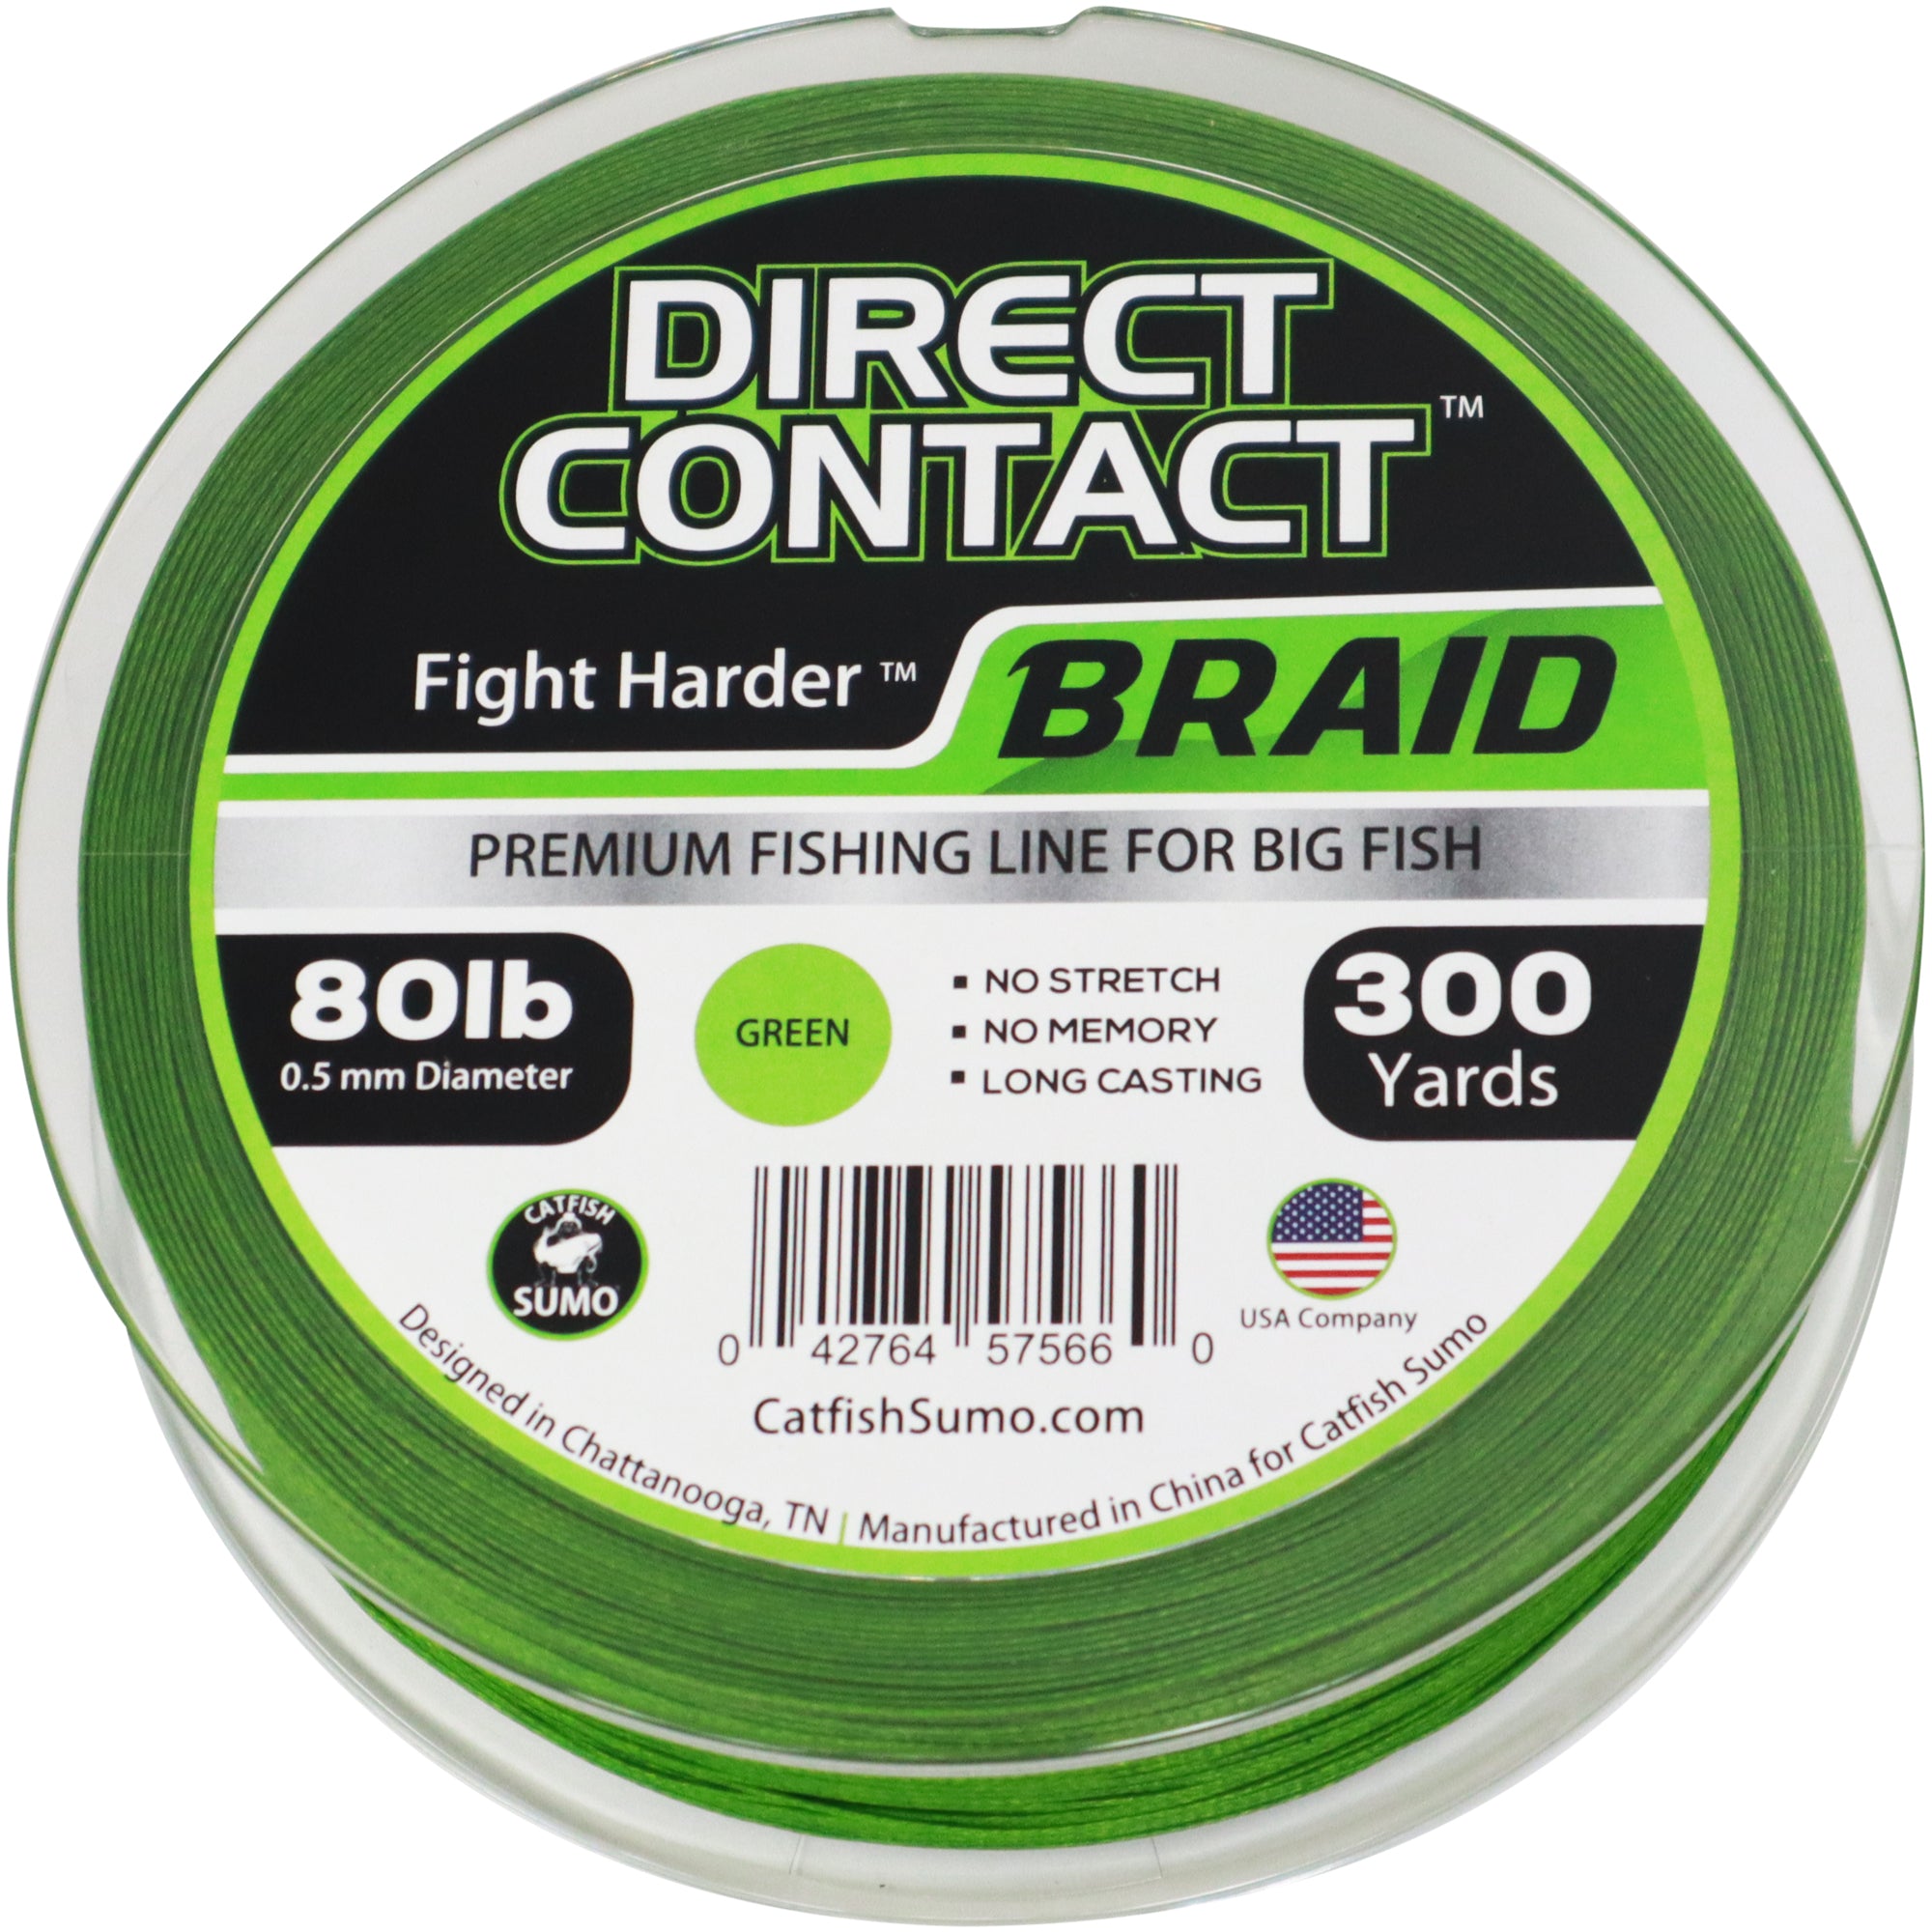 Direct Contact Premium Fishing Line for Big Fish, Braid, 300 Yard Spool 40lb / Bright White